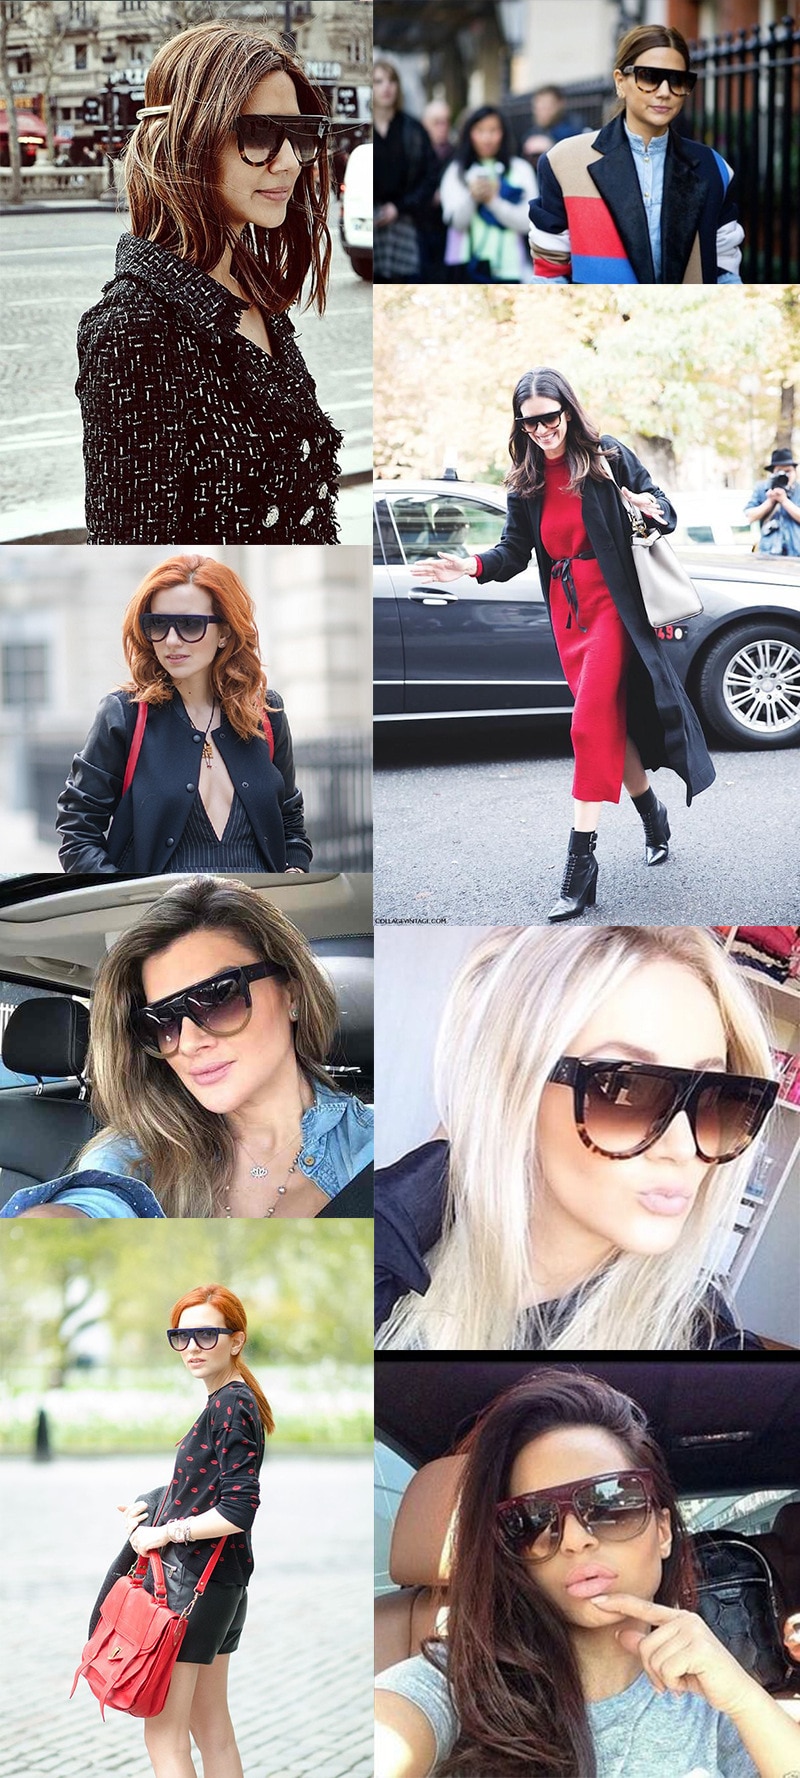 DJXFZLO-2018-Gafas-Fashion-Women-Sunglasses-Brand-Designer-Luxury-Vintage-Sun-glasses-Big-Full-Frame-32861773172